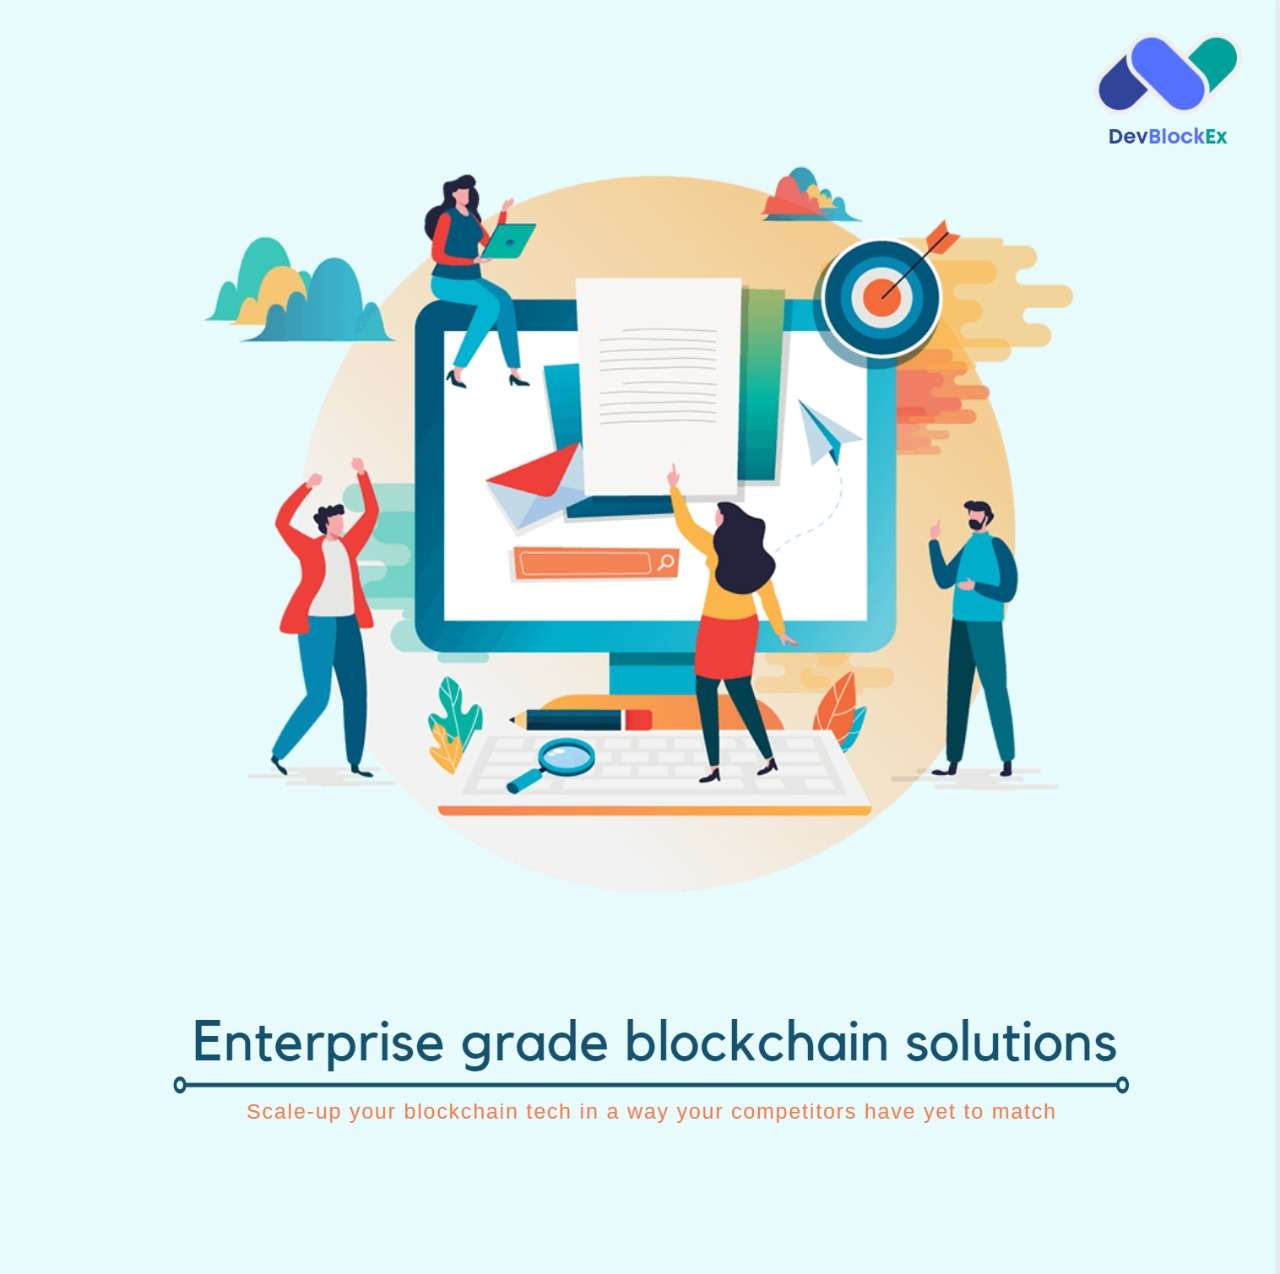 How Big Organizations are Benefitting through DevBlockEx’s EnterpriseGrade Blockchain Solutions